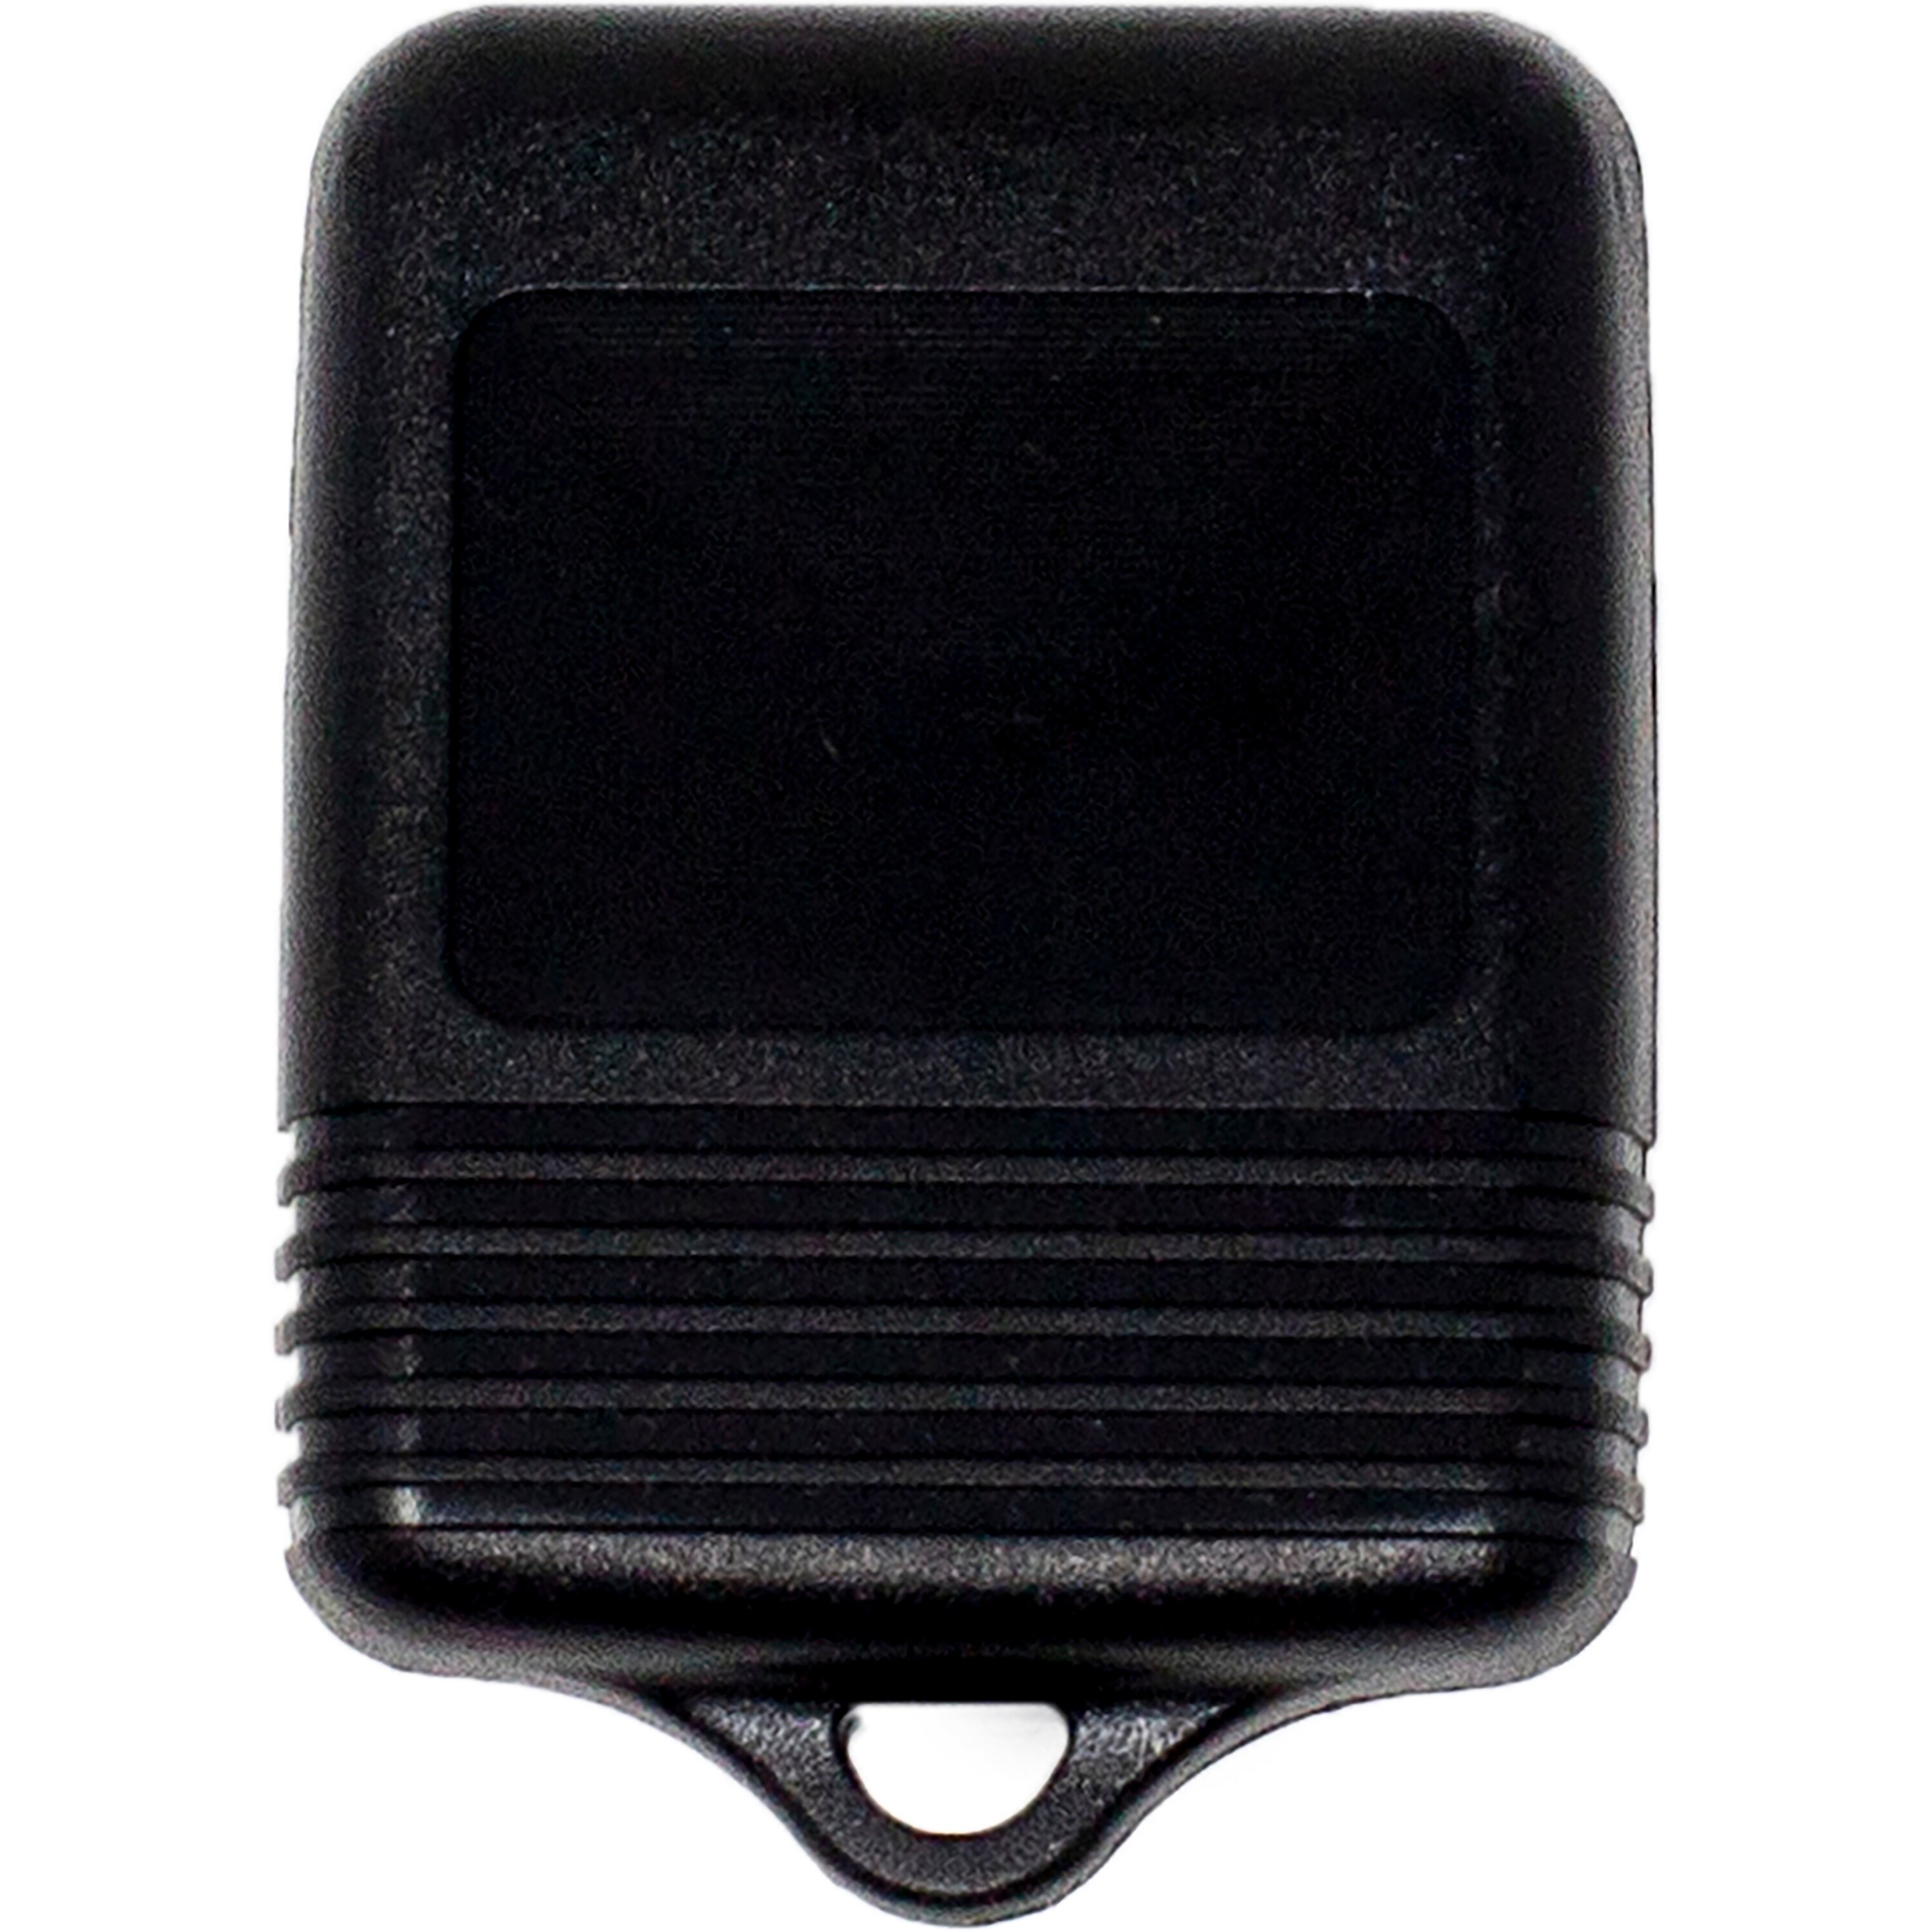 Car Keys Express Black Car Keyless Entry Remote for Select